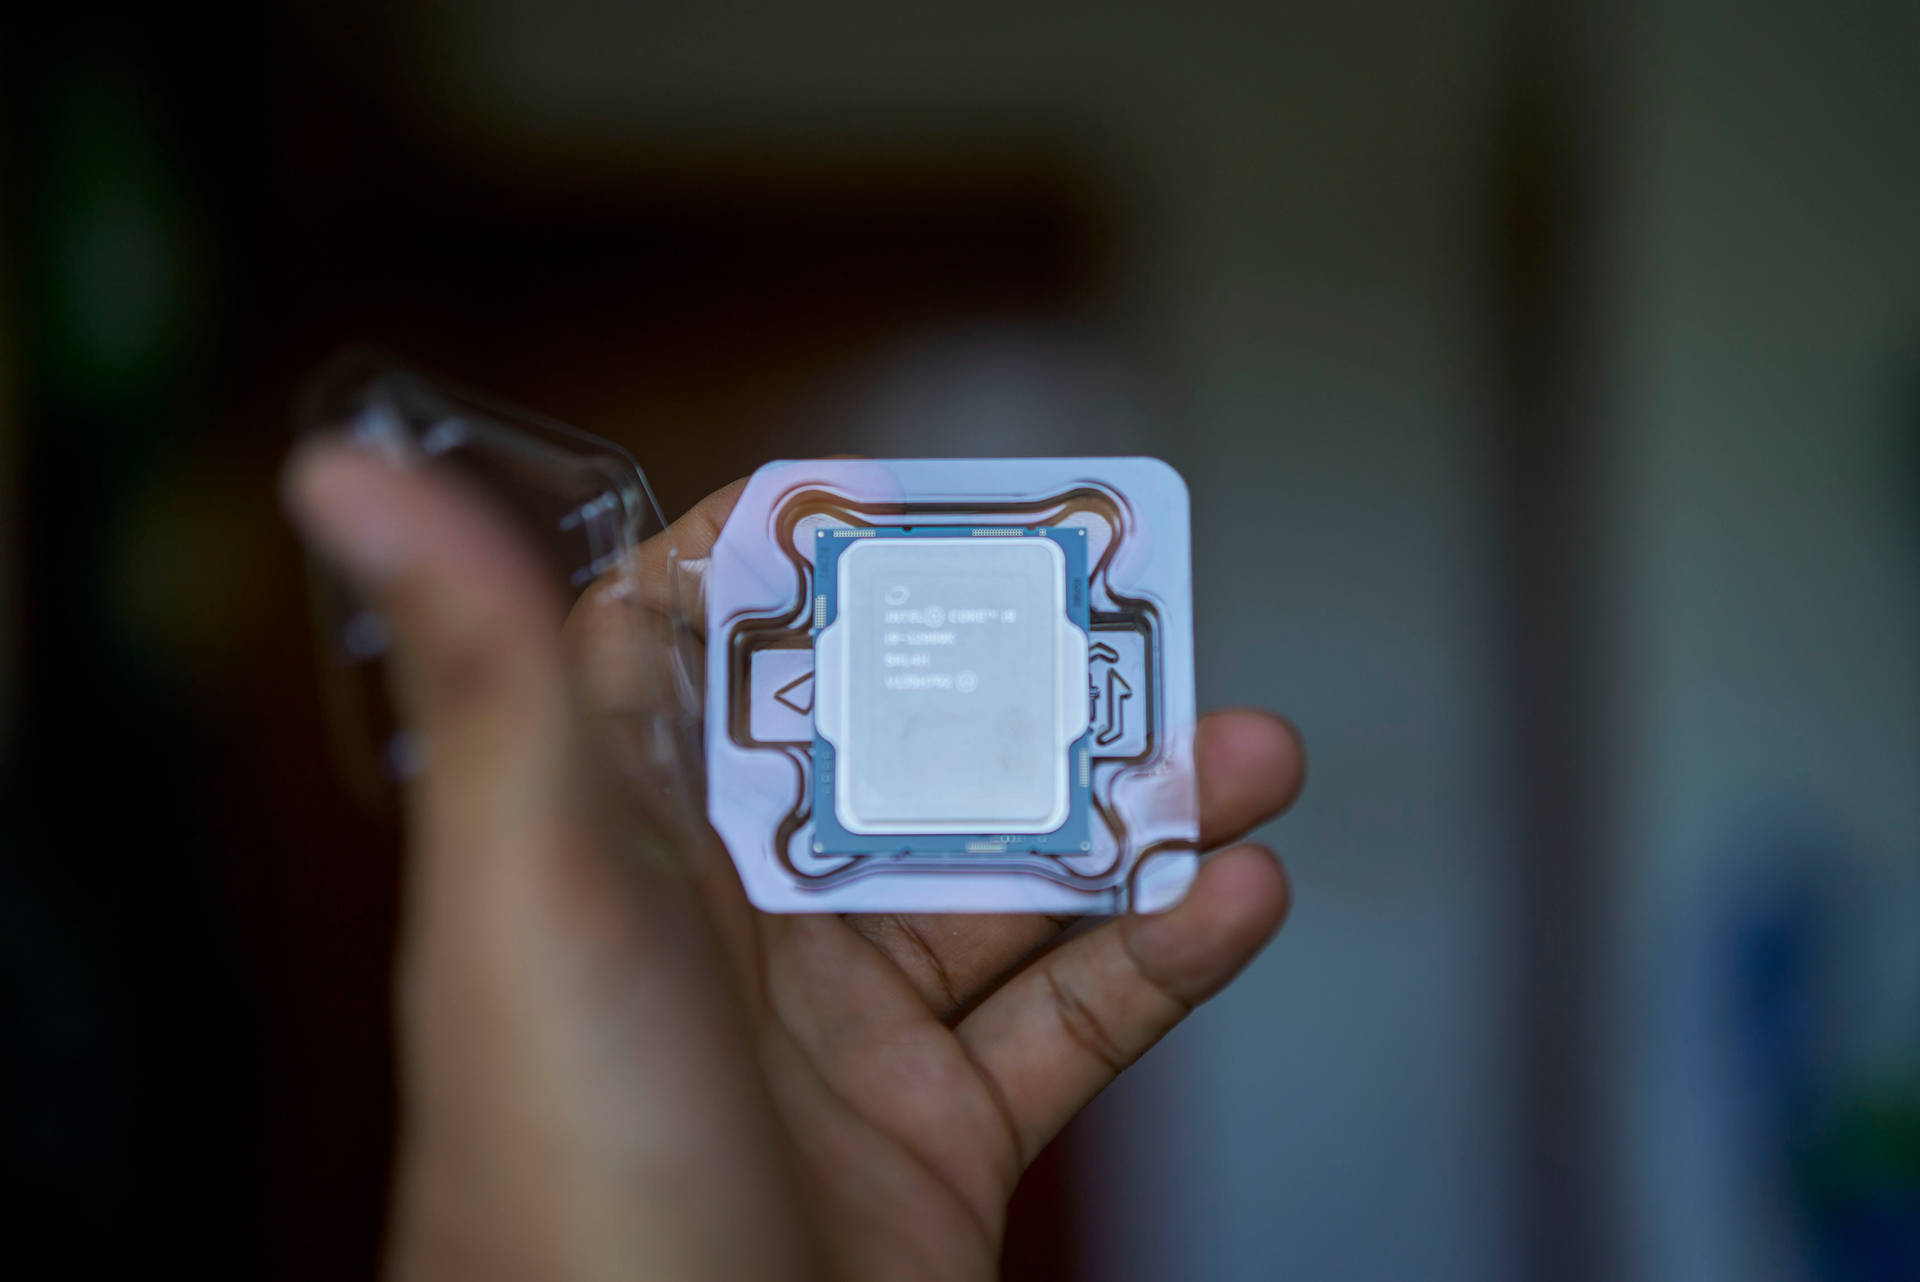 Intel Core I5 Processor